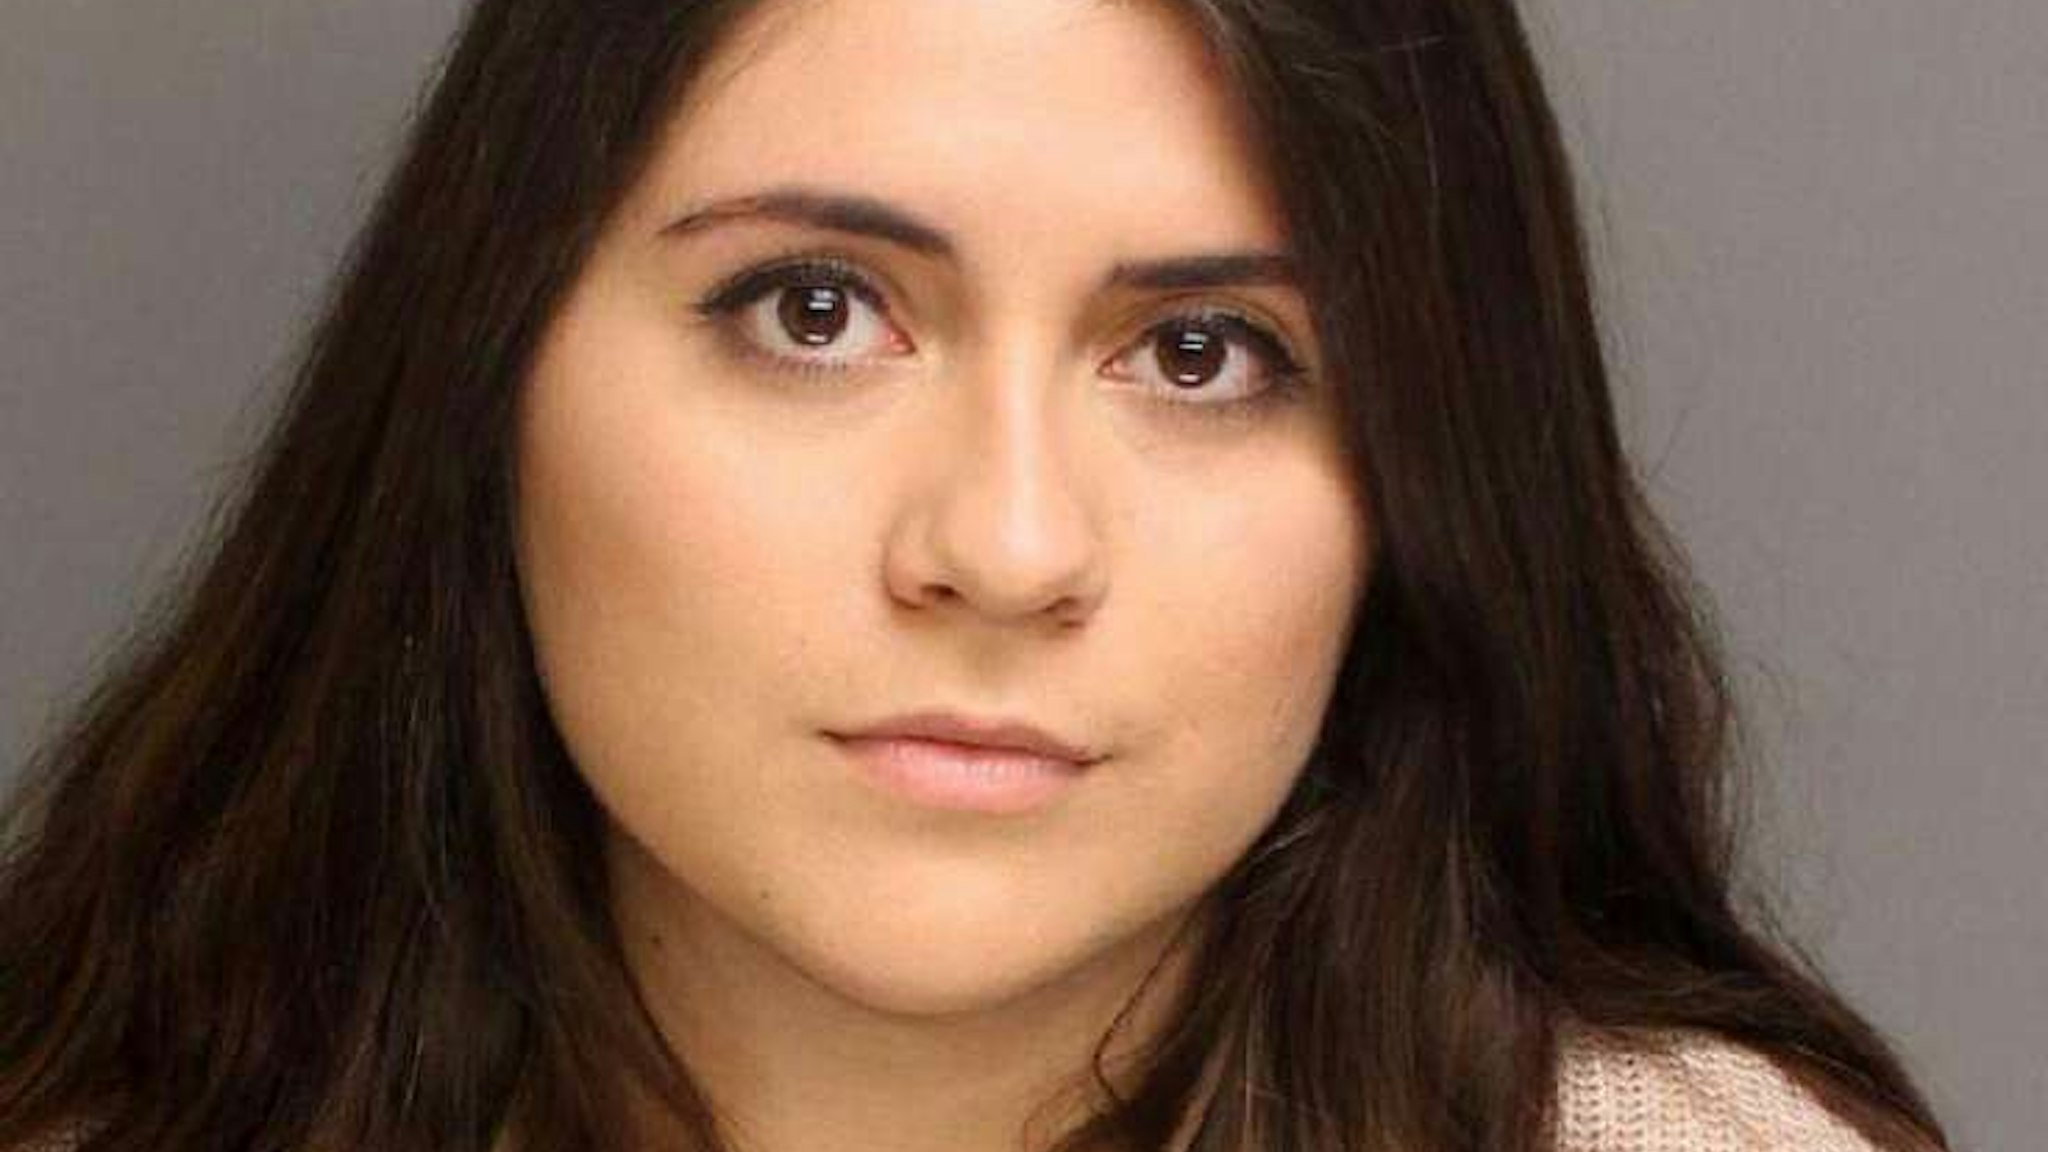 Nikki Yovino falsely accused two Sacred Heart University football players of rape.